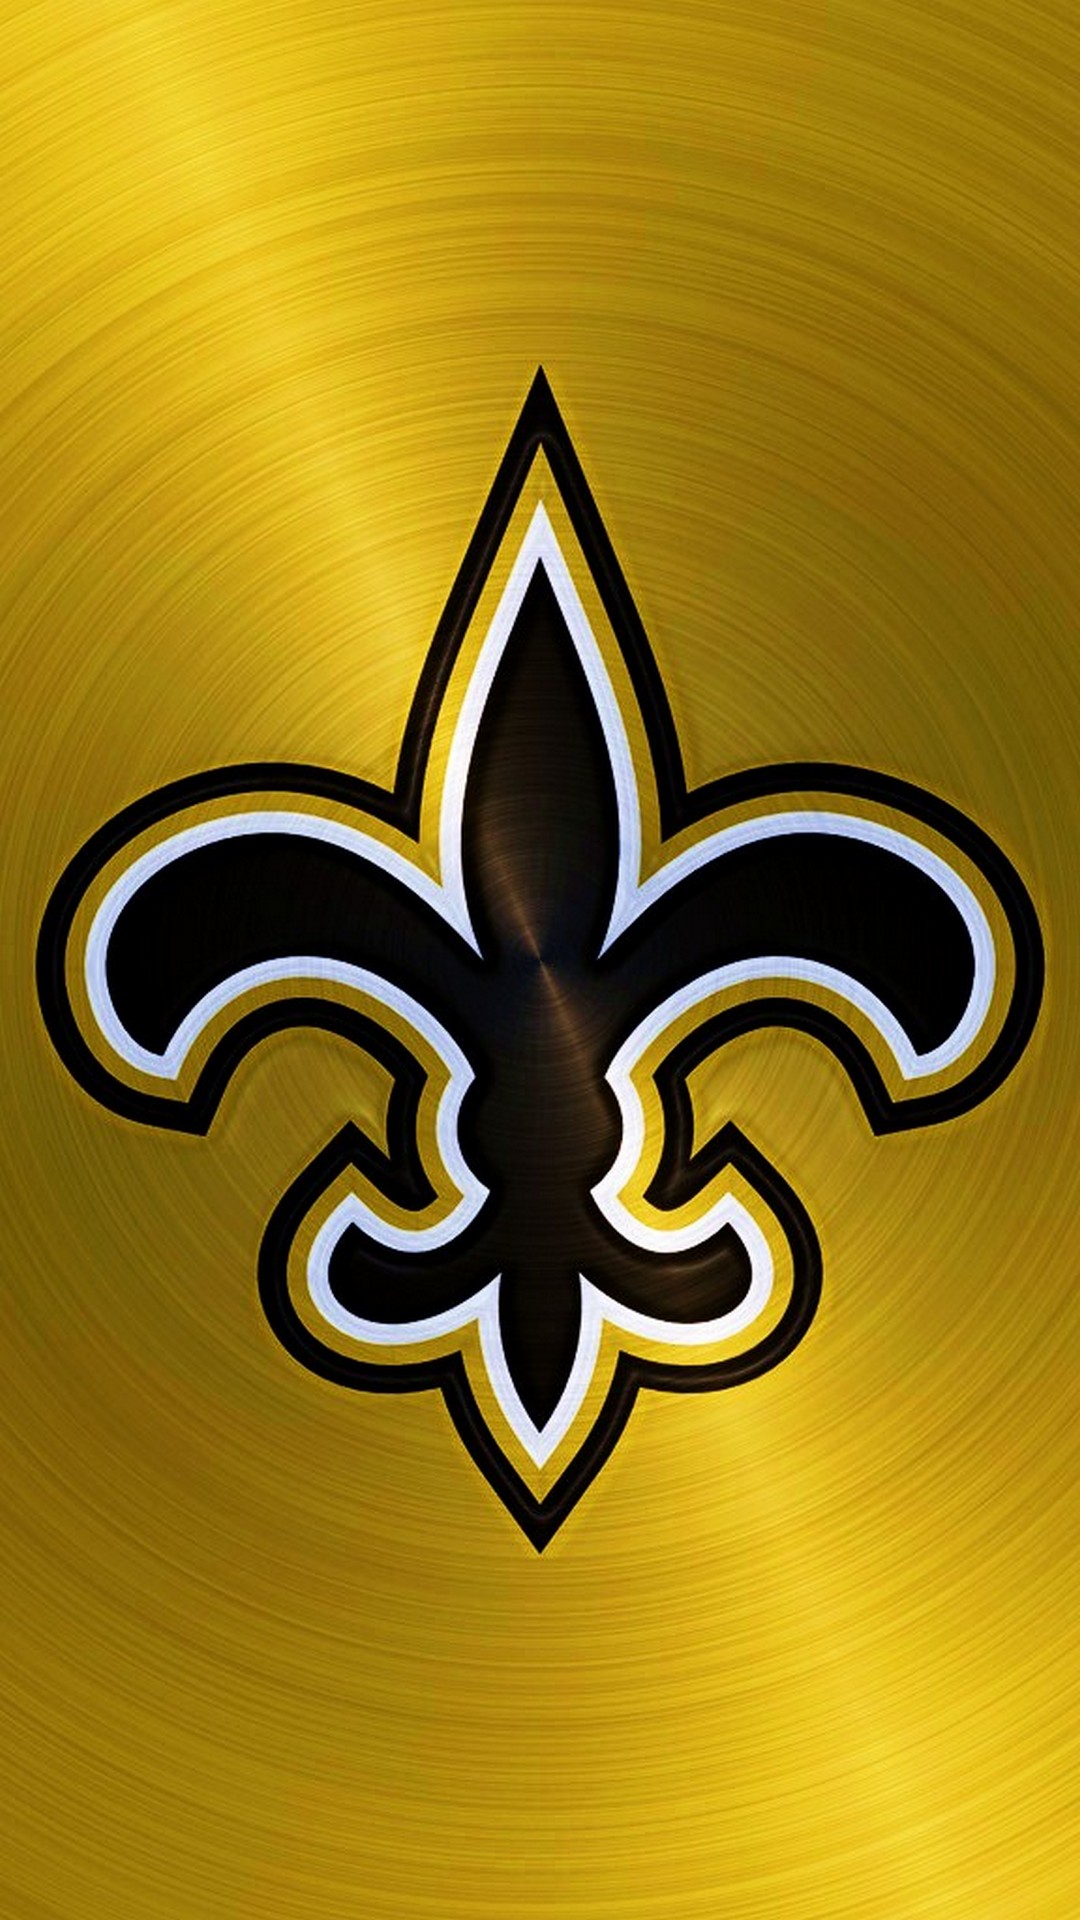 Screensaver iPhone New Orleans Saints NFL iPhone Wallpaper